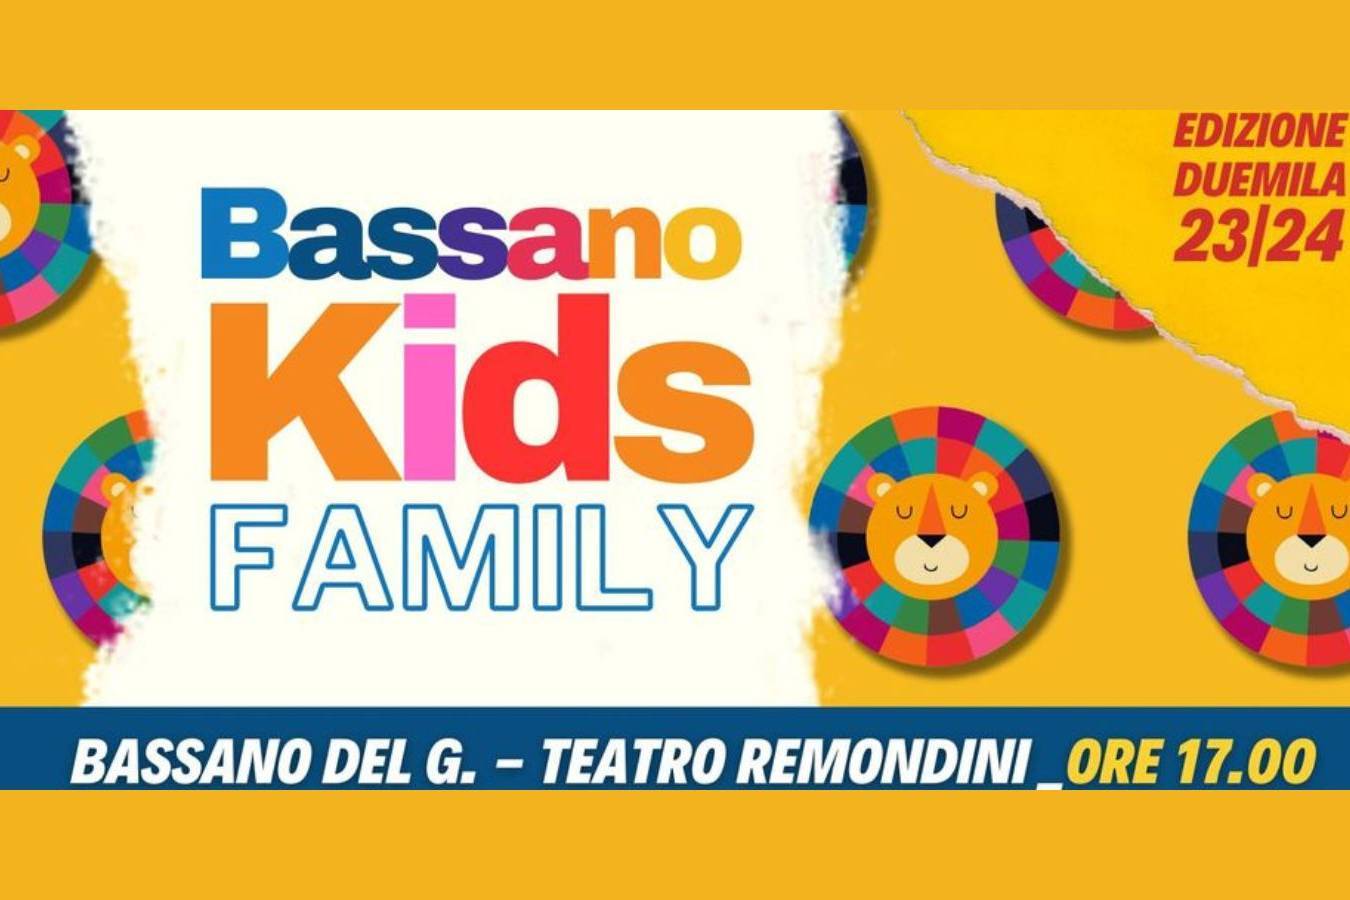 BASSANO KIDS FAMILY 